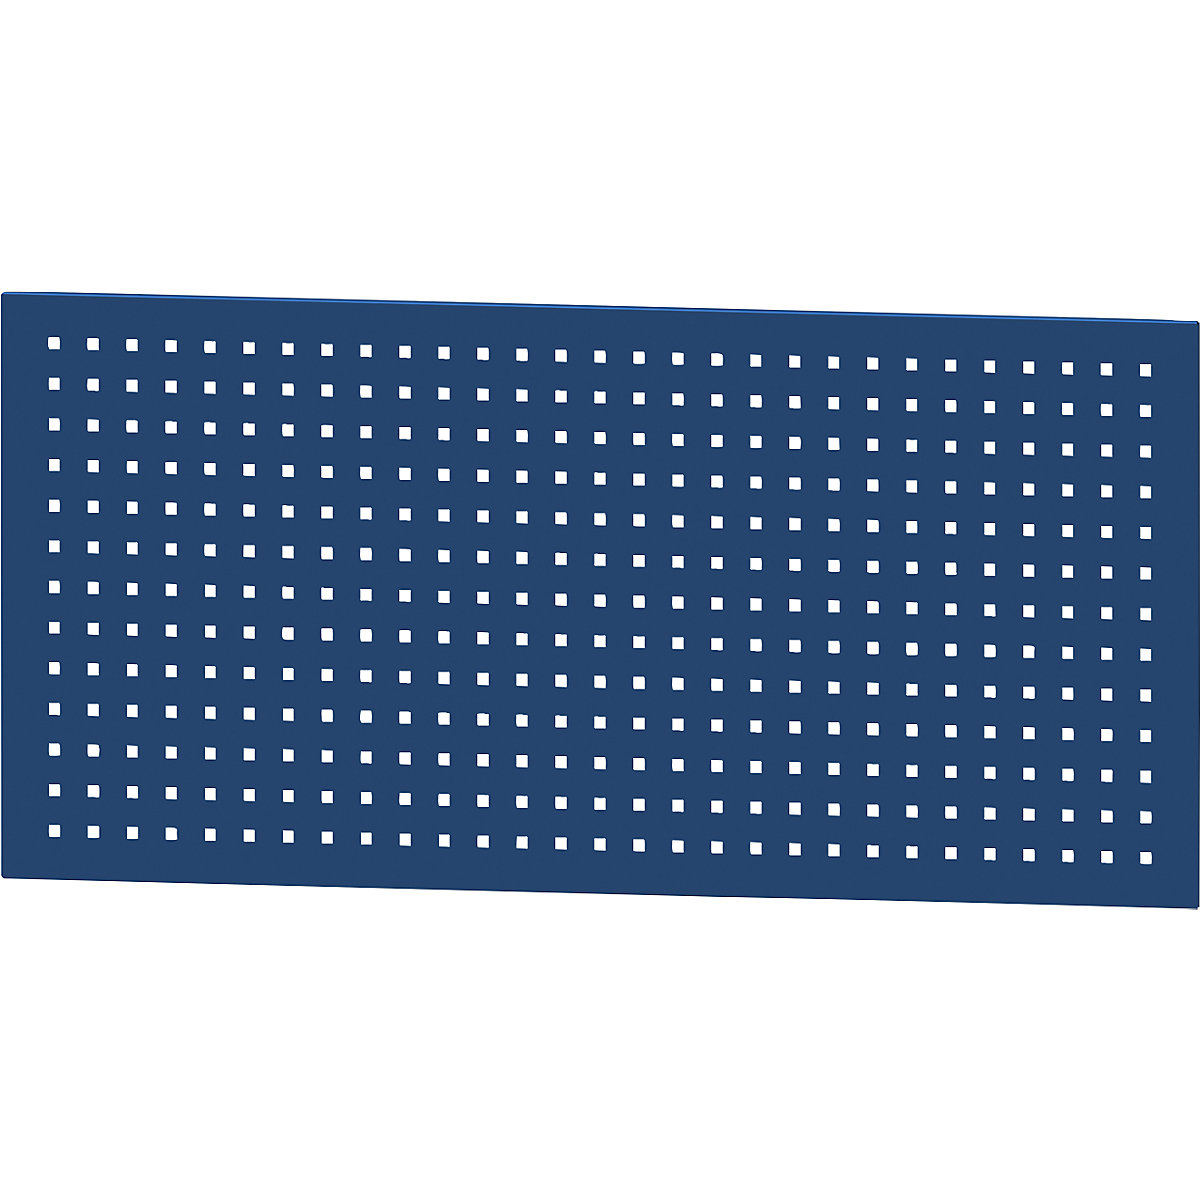 Placa perforada – ANKE, anchura 600 mm, longitud 1250 mm, azul-2